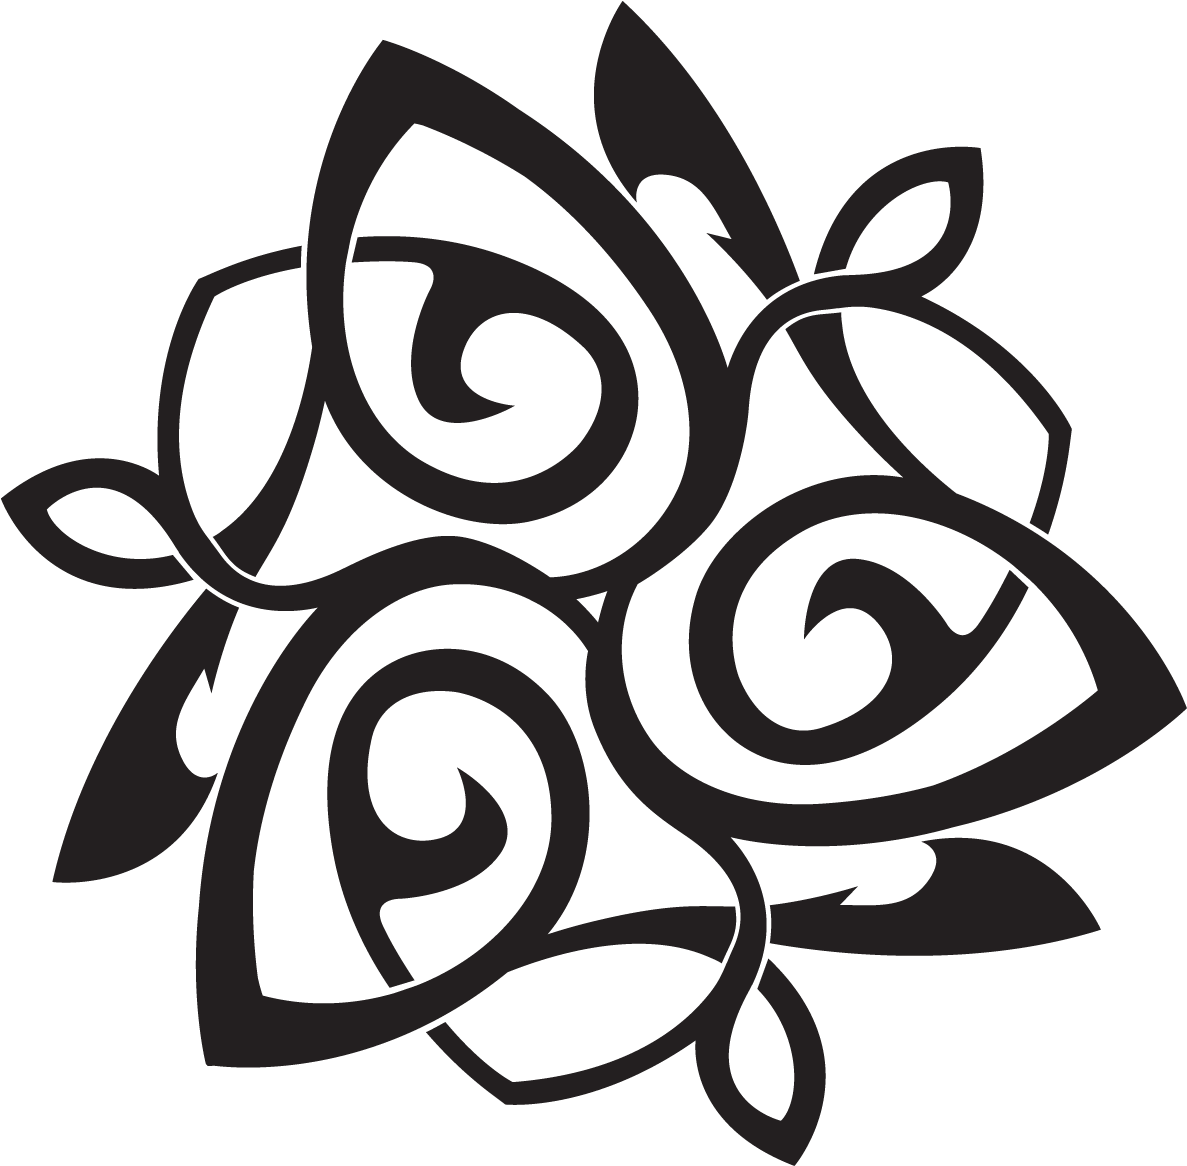 Ladybloodflower 50 21 Tribal Ornament By Schlammsuhler - Encapsulated Postscript (1200x1185)